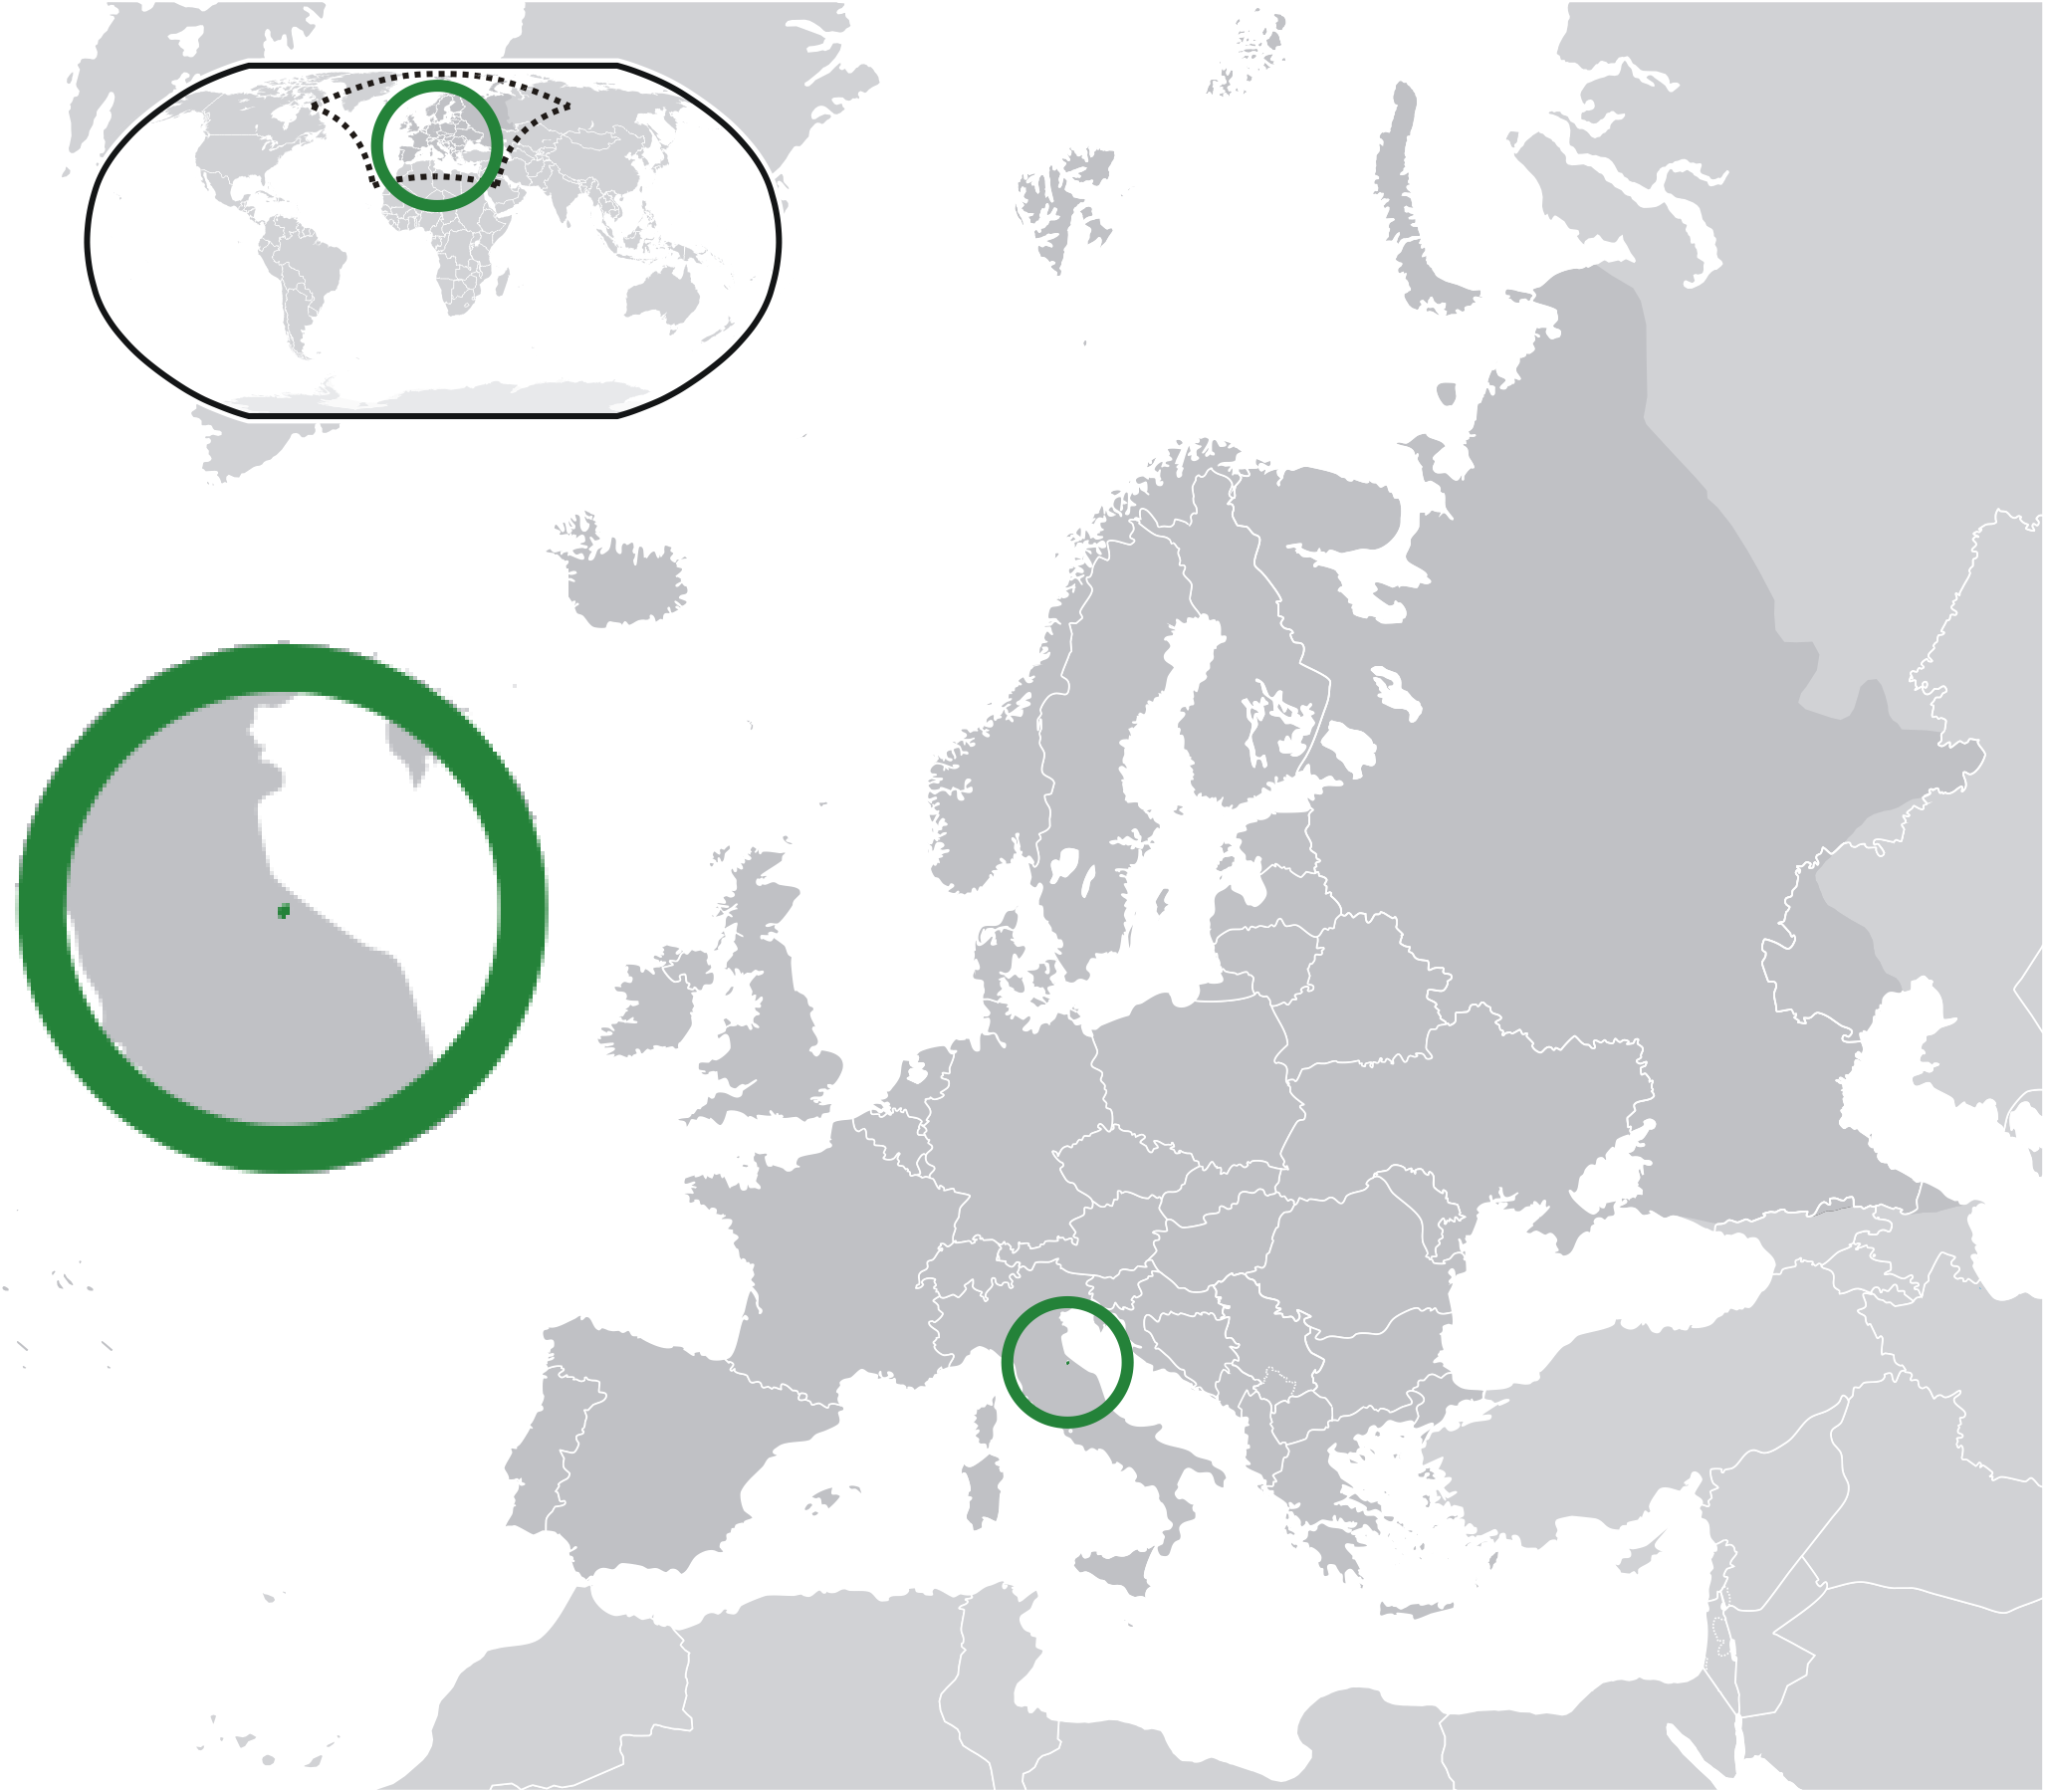 Location of Republic of San Marino